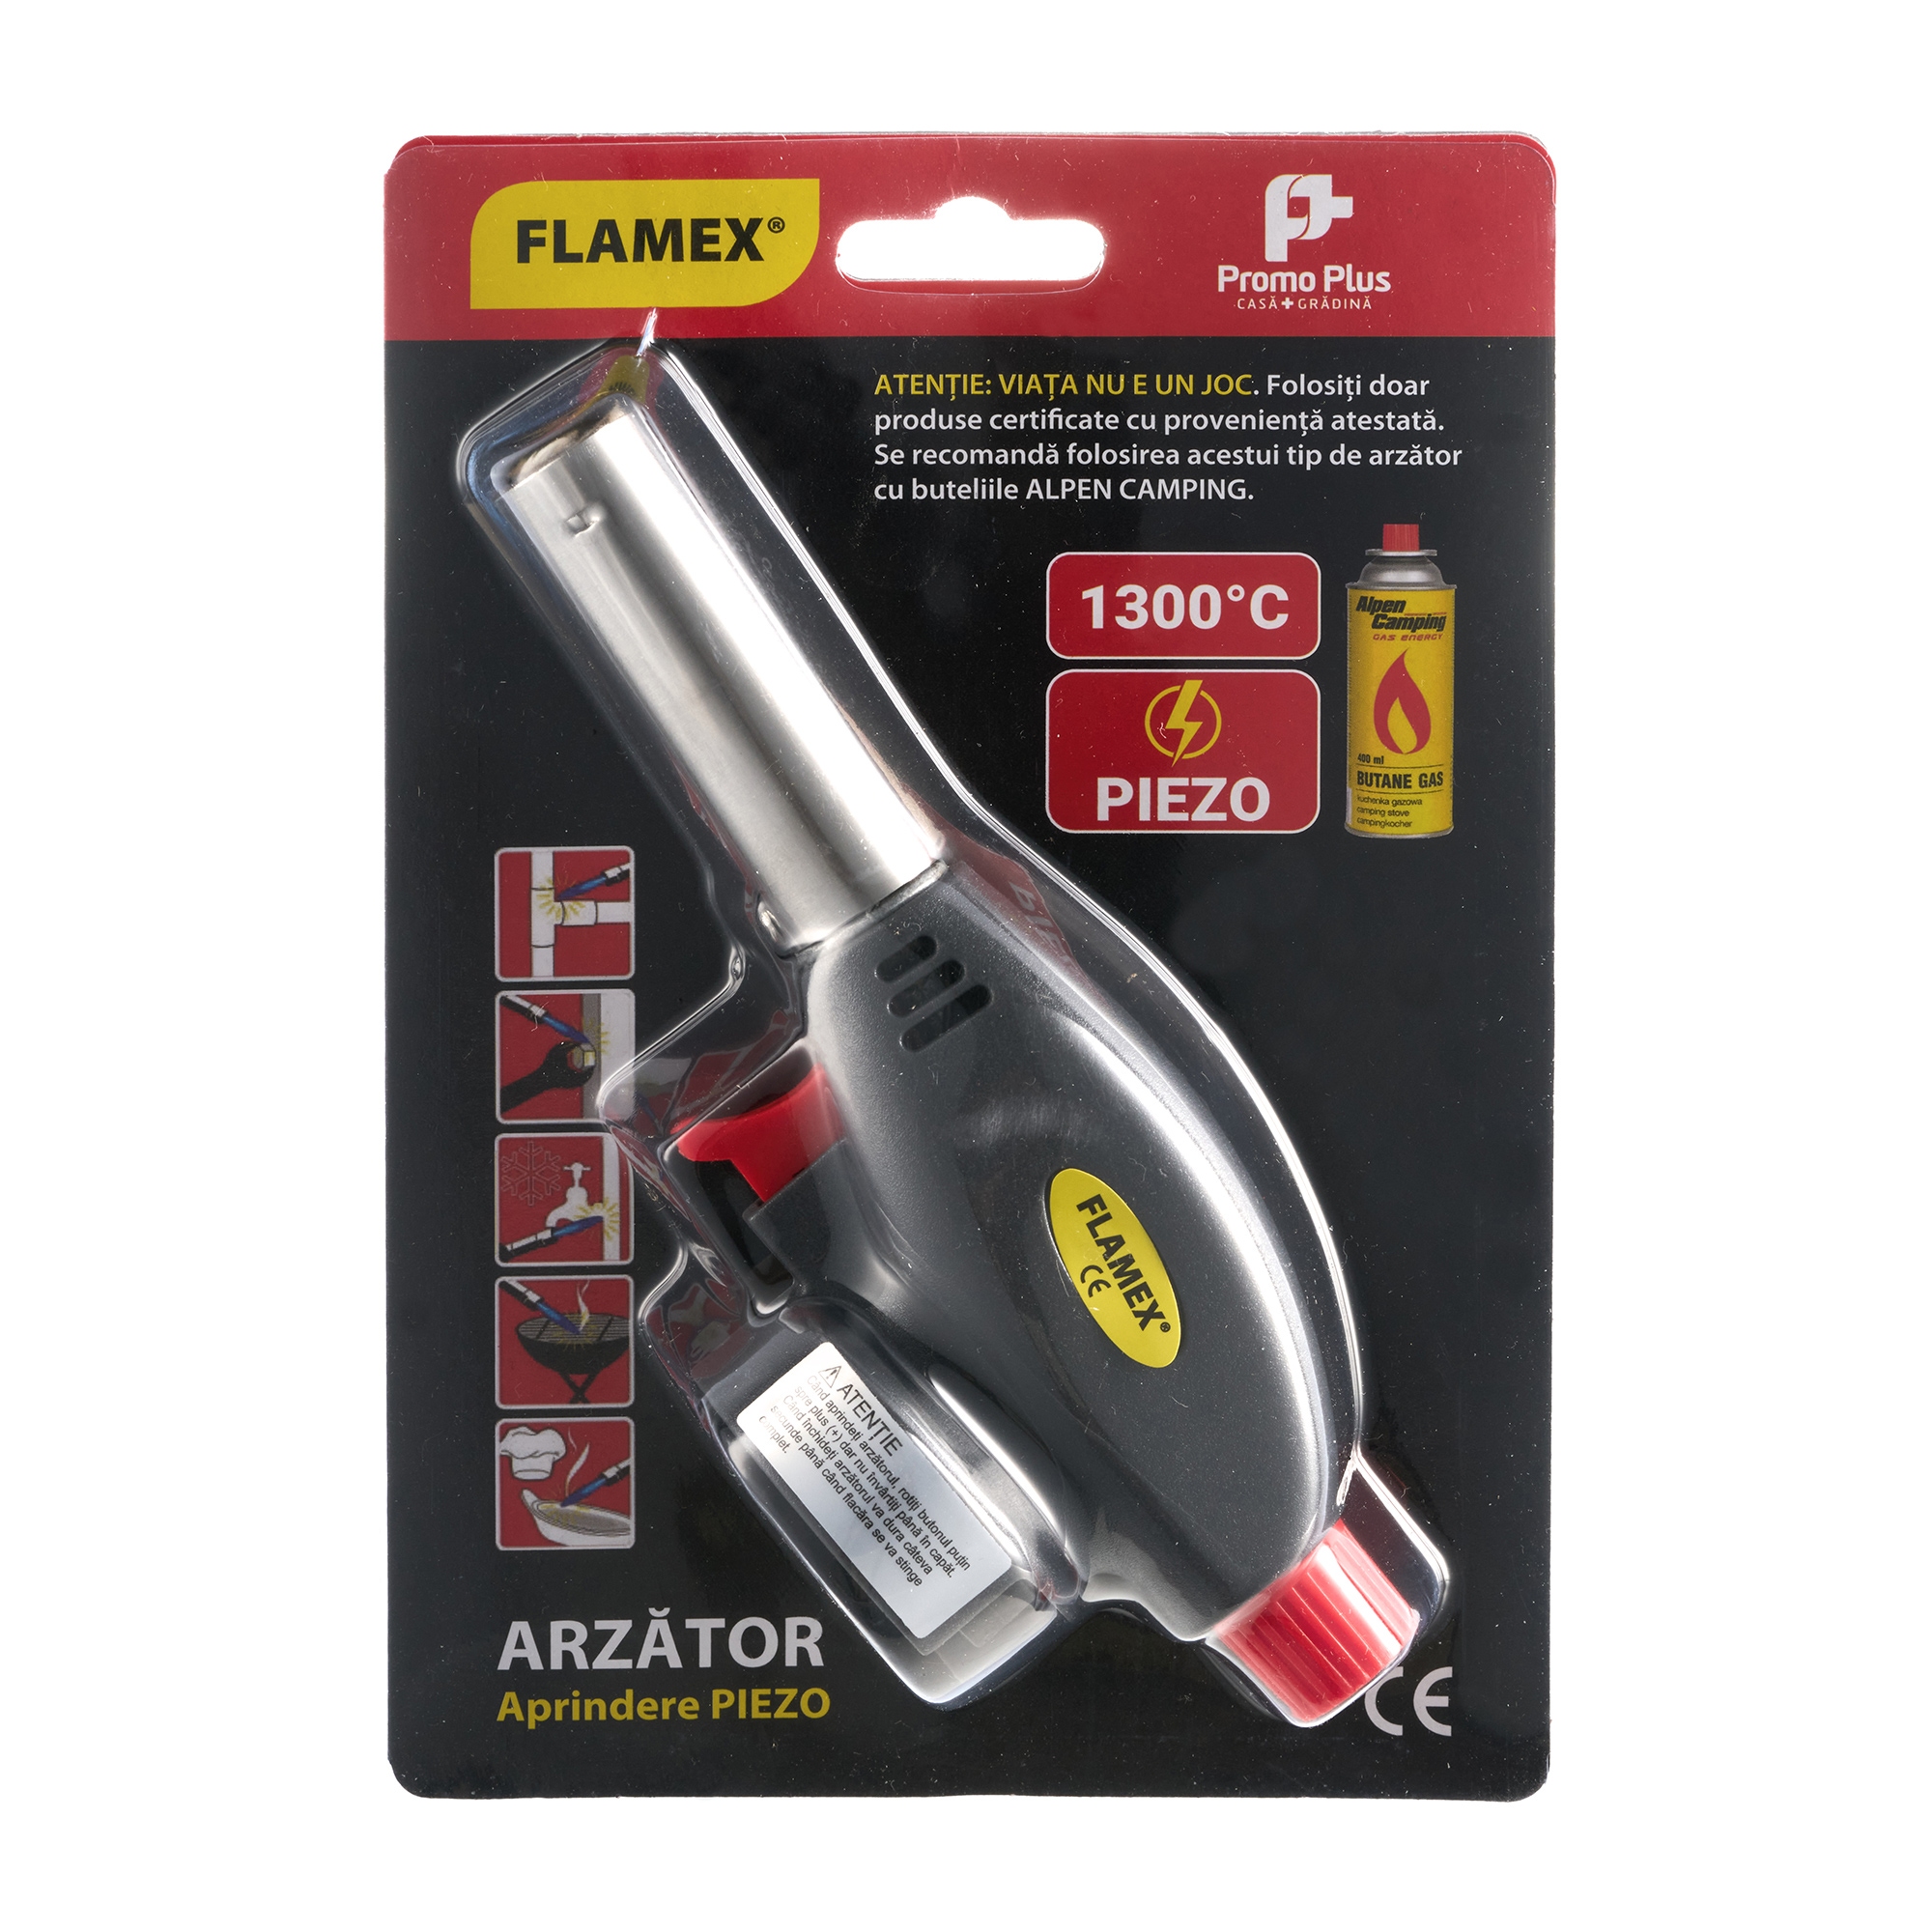 Cap arzator Flamex 227, pentru butelie spray gaz 227 GR, plastic + metal